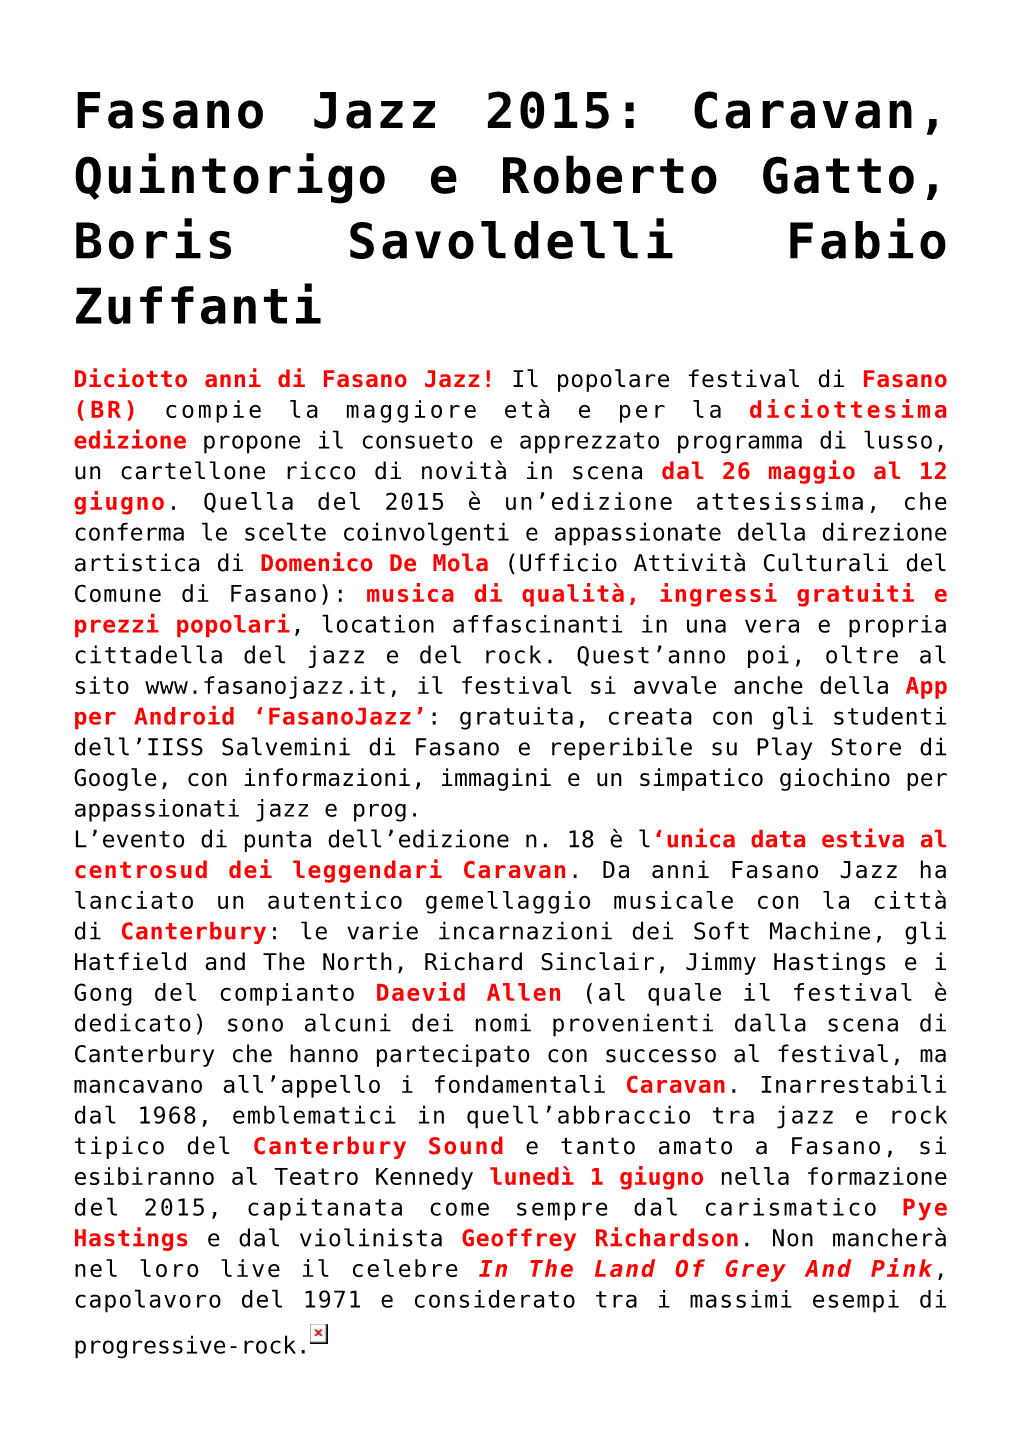 Fasano Jazz 2015: Caravan, Quintorigo E Roberto Gatto, Boris Savoldelli Fabio Zuffanti